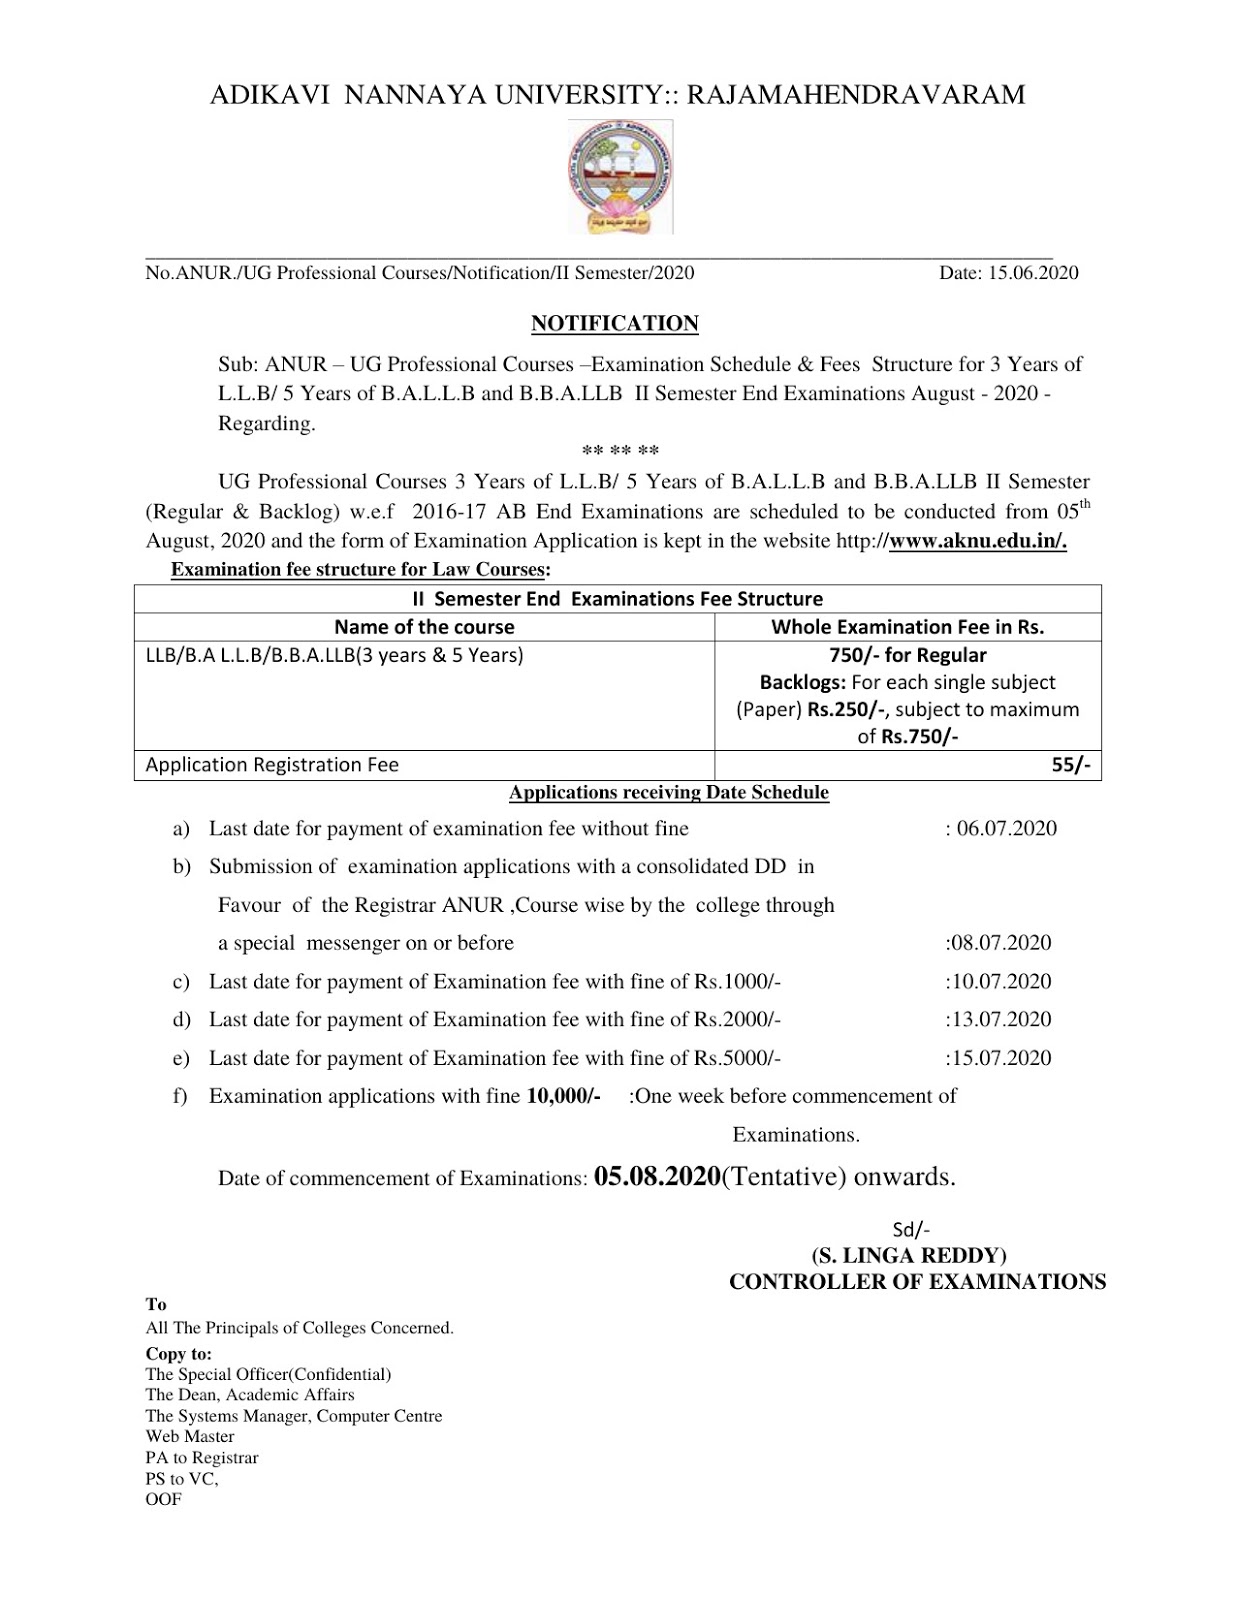 adk nannaya university ug llb 3rd  & 5th year 2nd sem reg & backlog july 2020 fee notification